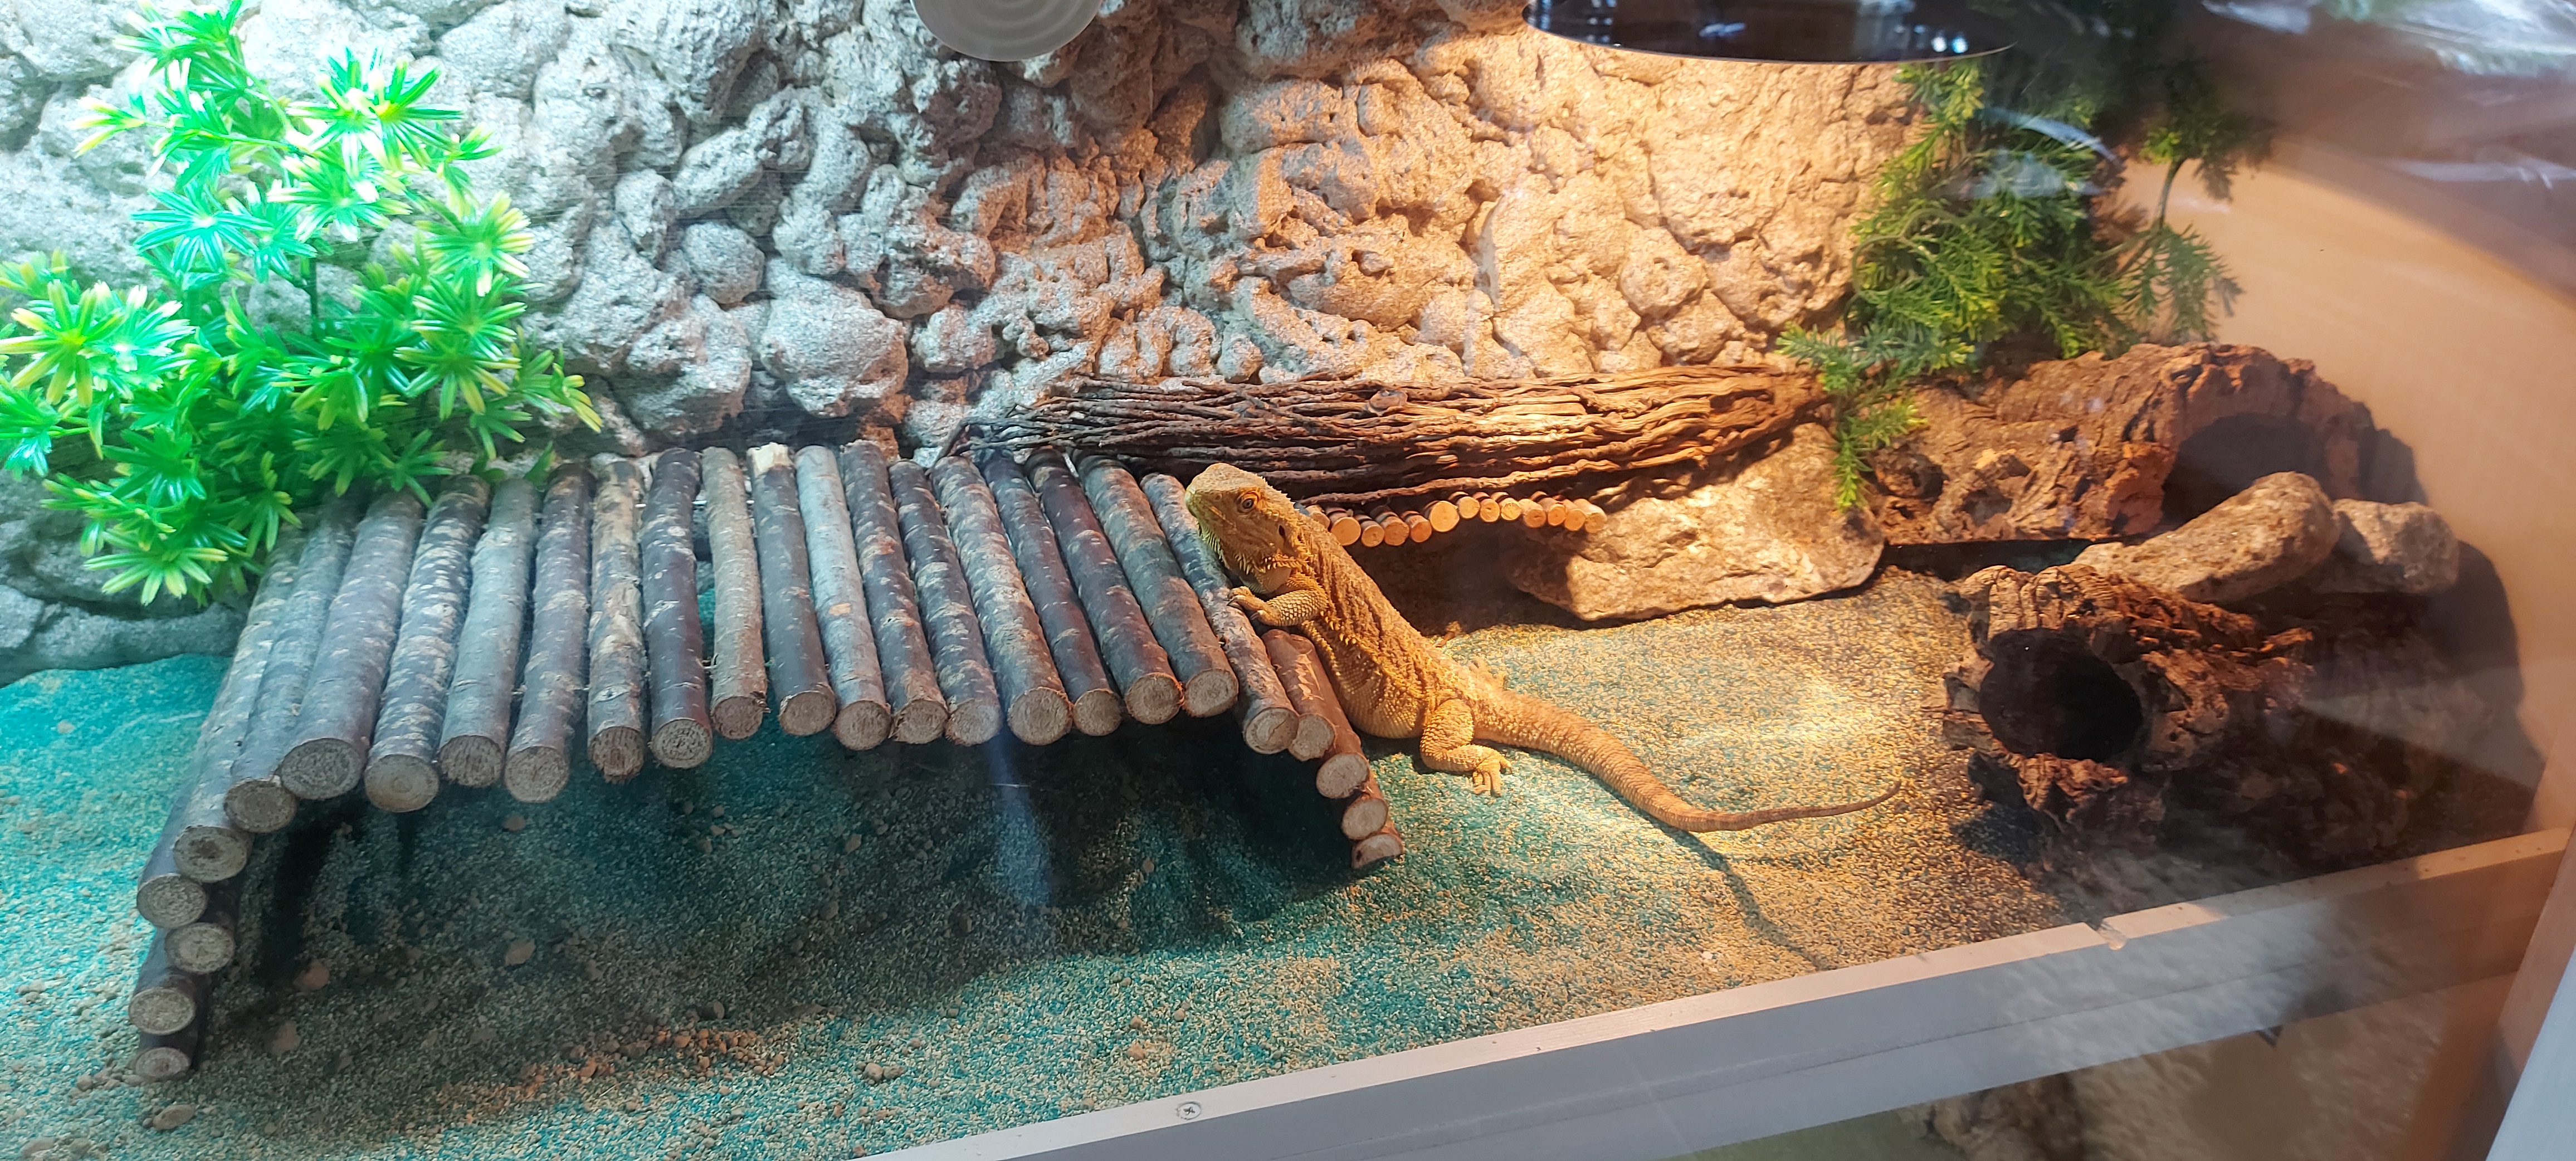 Customer needed a lizard vivarium to fit a specific gap